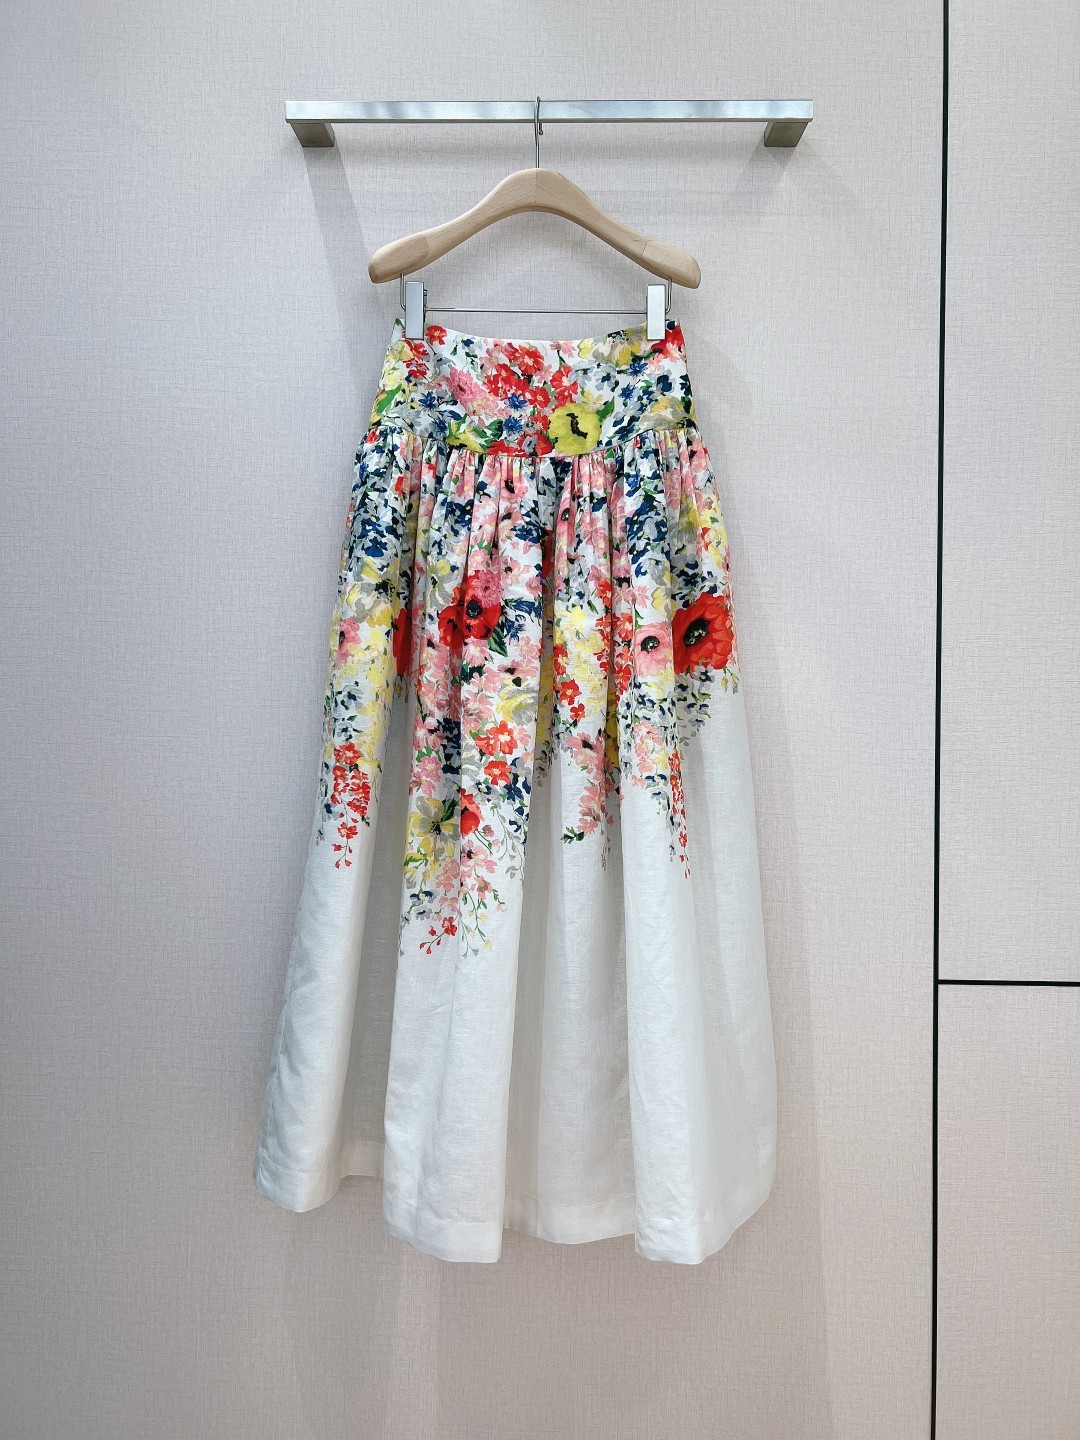 ZIMMERMAN*N新款半裙这款象牙白花卉图案的长款半身裙选用亚麻面料制成饰有漂亮的花卉图案采用缩褶设